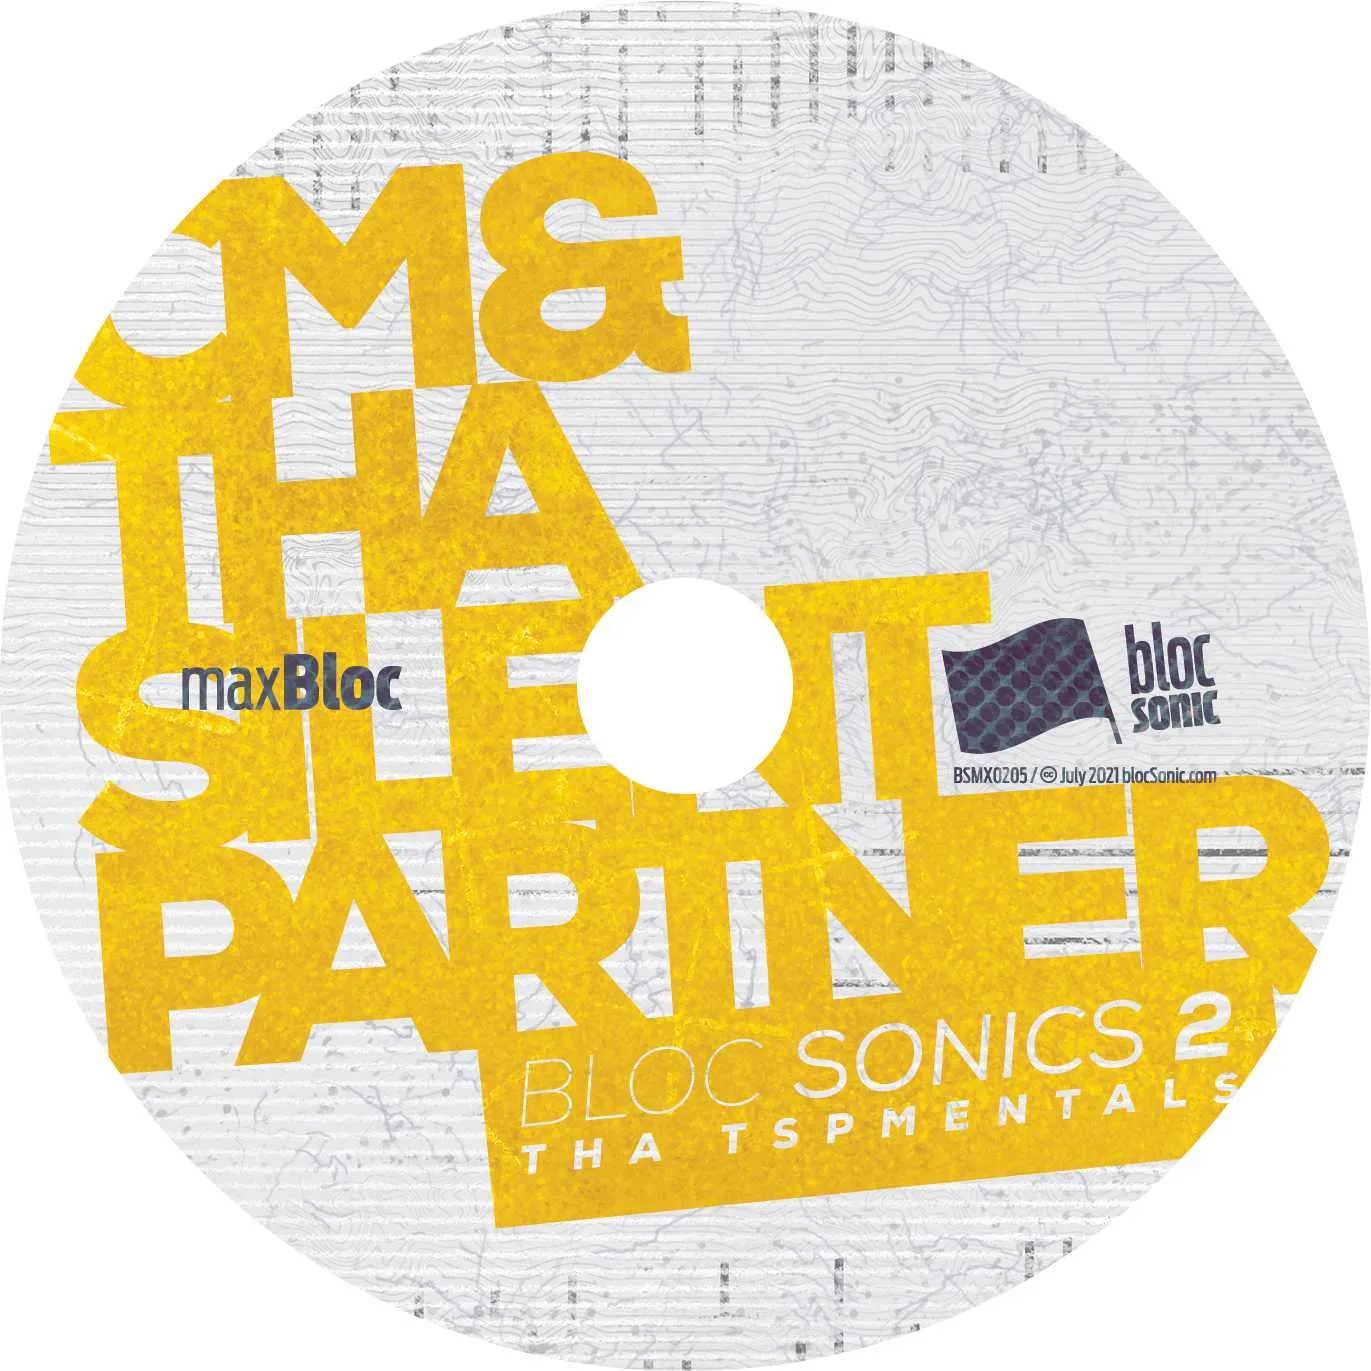 Album disc for “bloc Sonics 2 (Tha TSPMENTALS)” by CM &amp; Tha Silent Partner